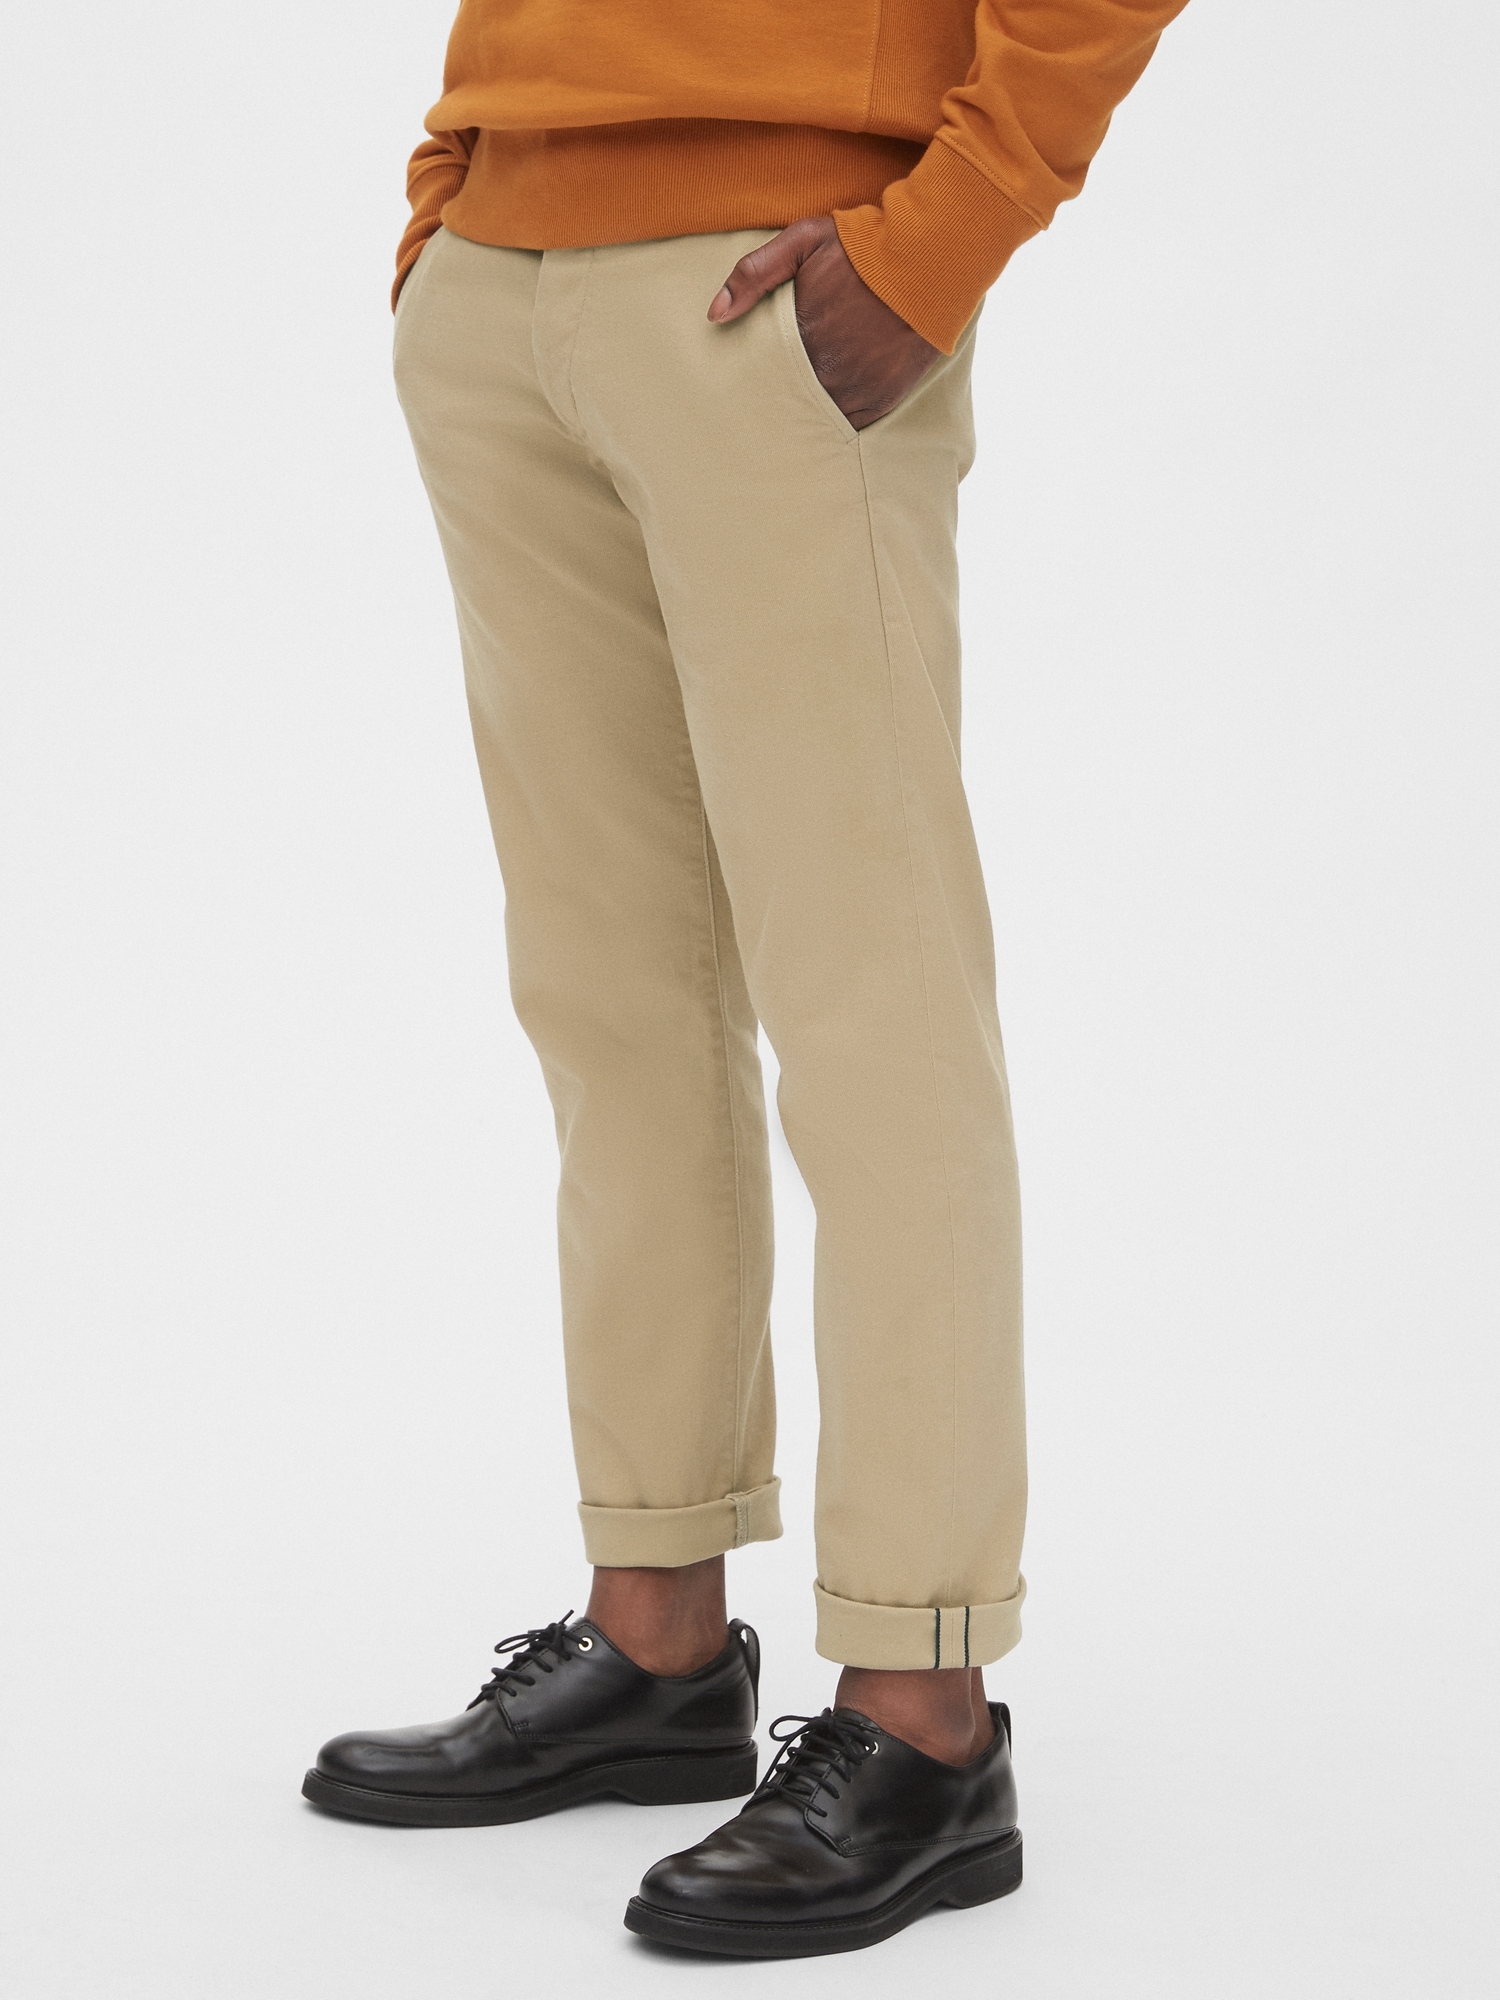 Gap Khakis Tailored Straight Fit Khaki Pants, Men's 29x30 (Grey)